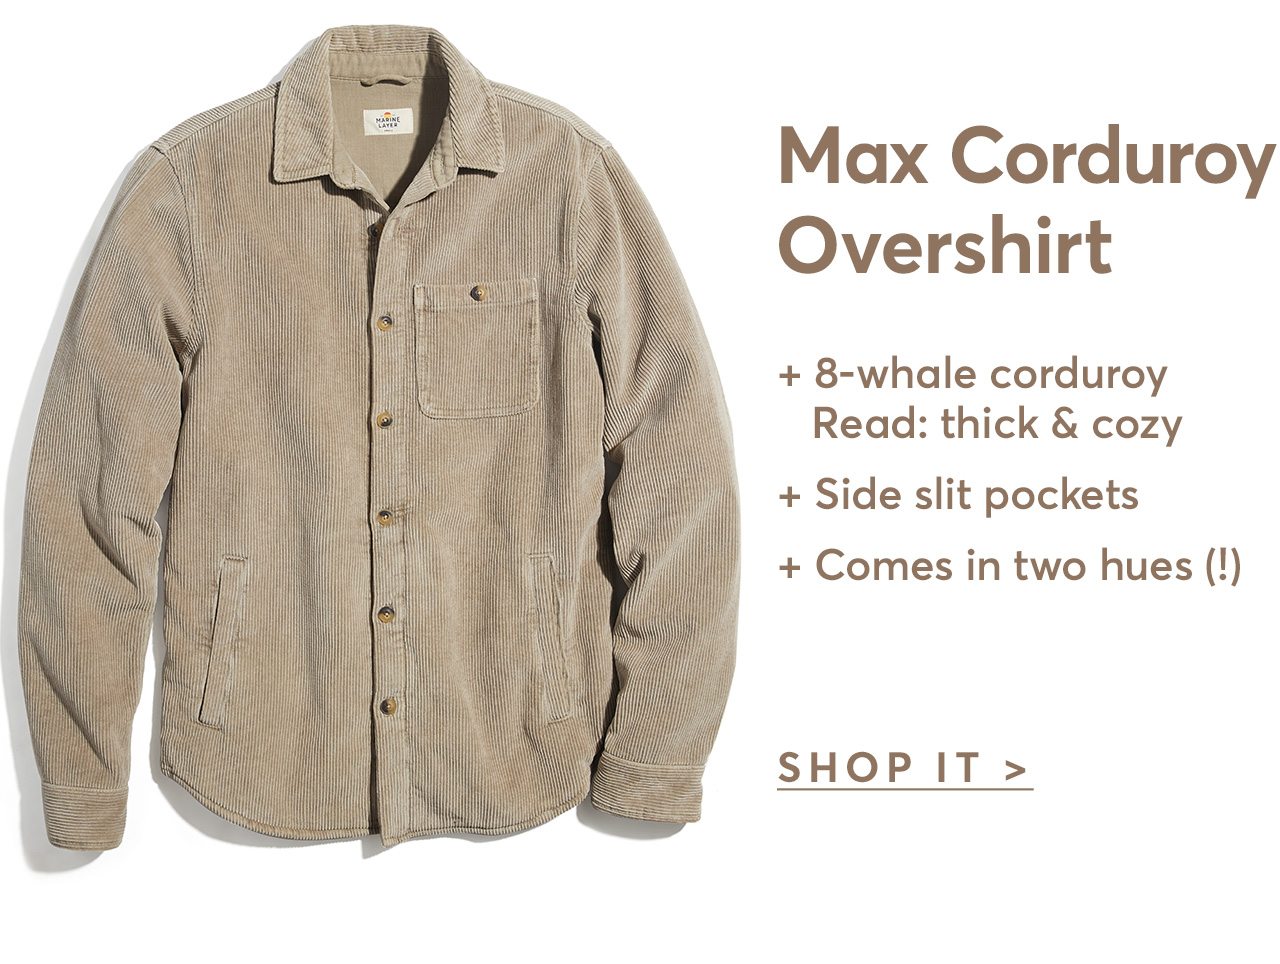 Max Corduroy Overshirt